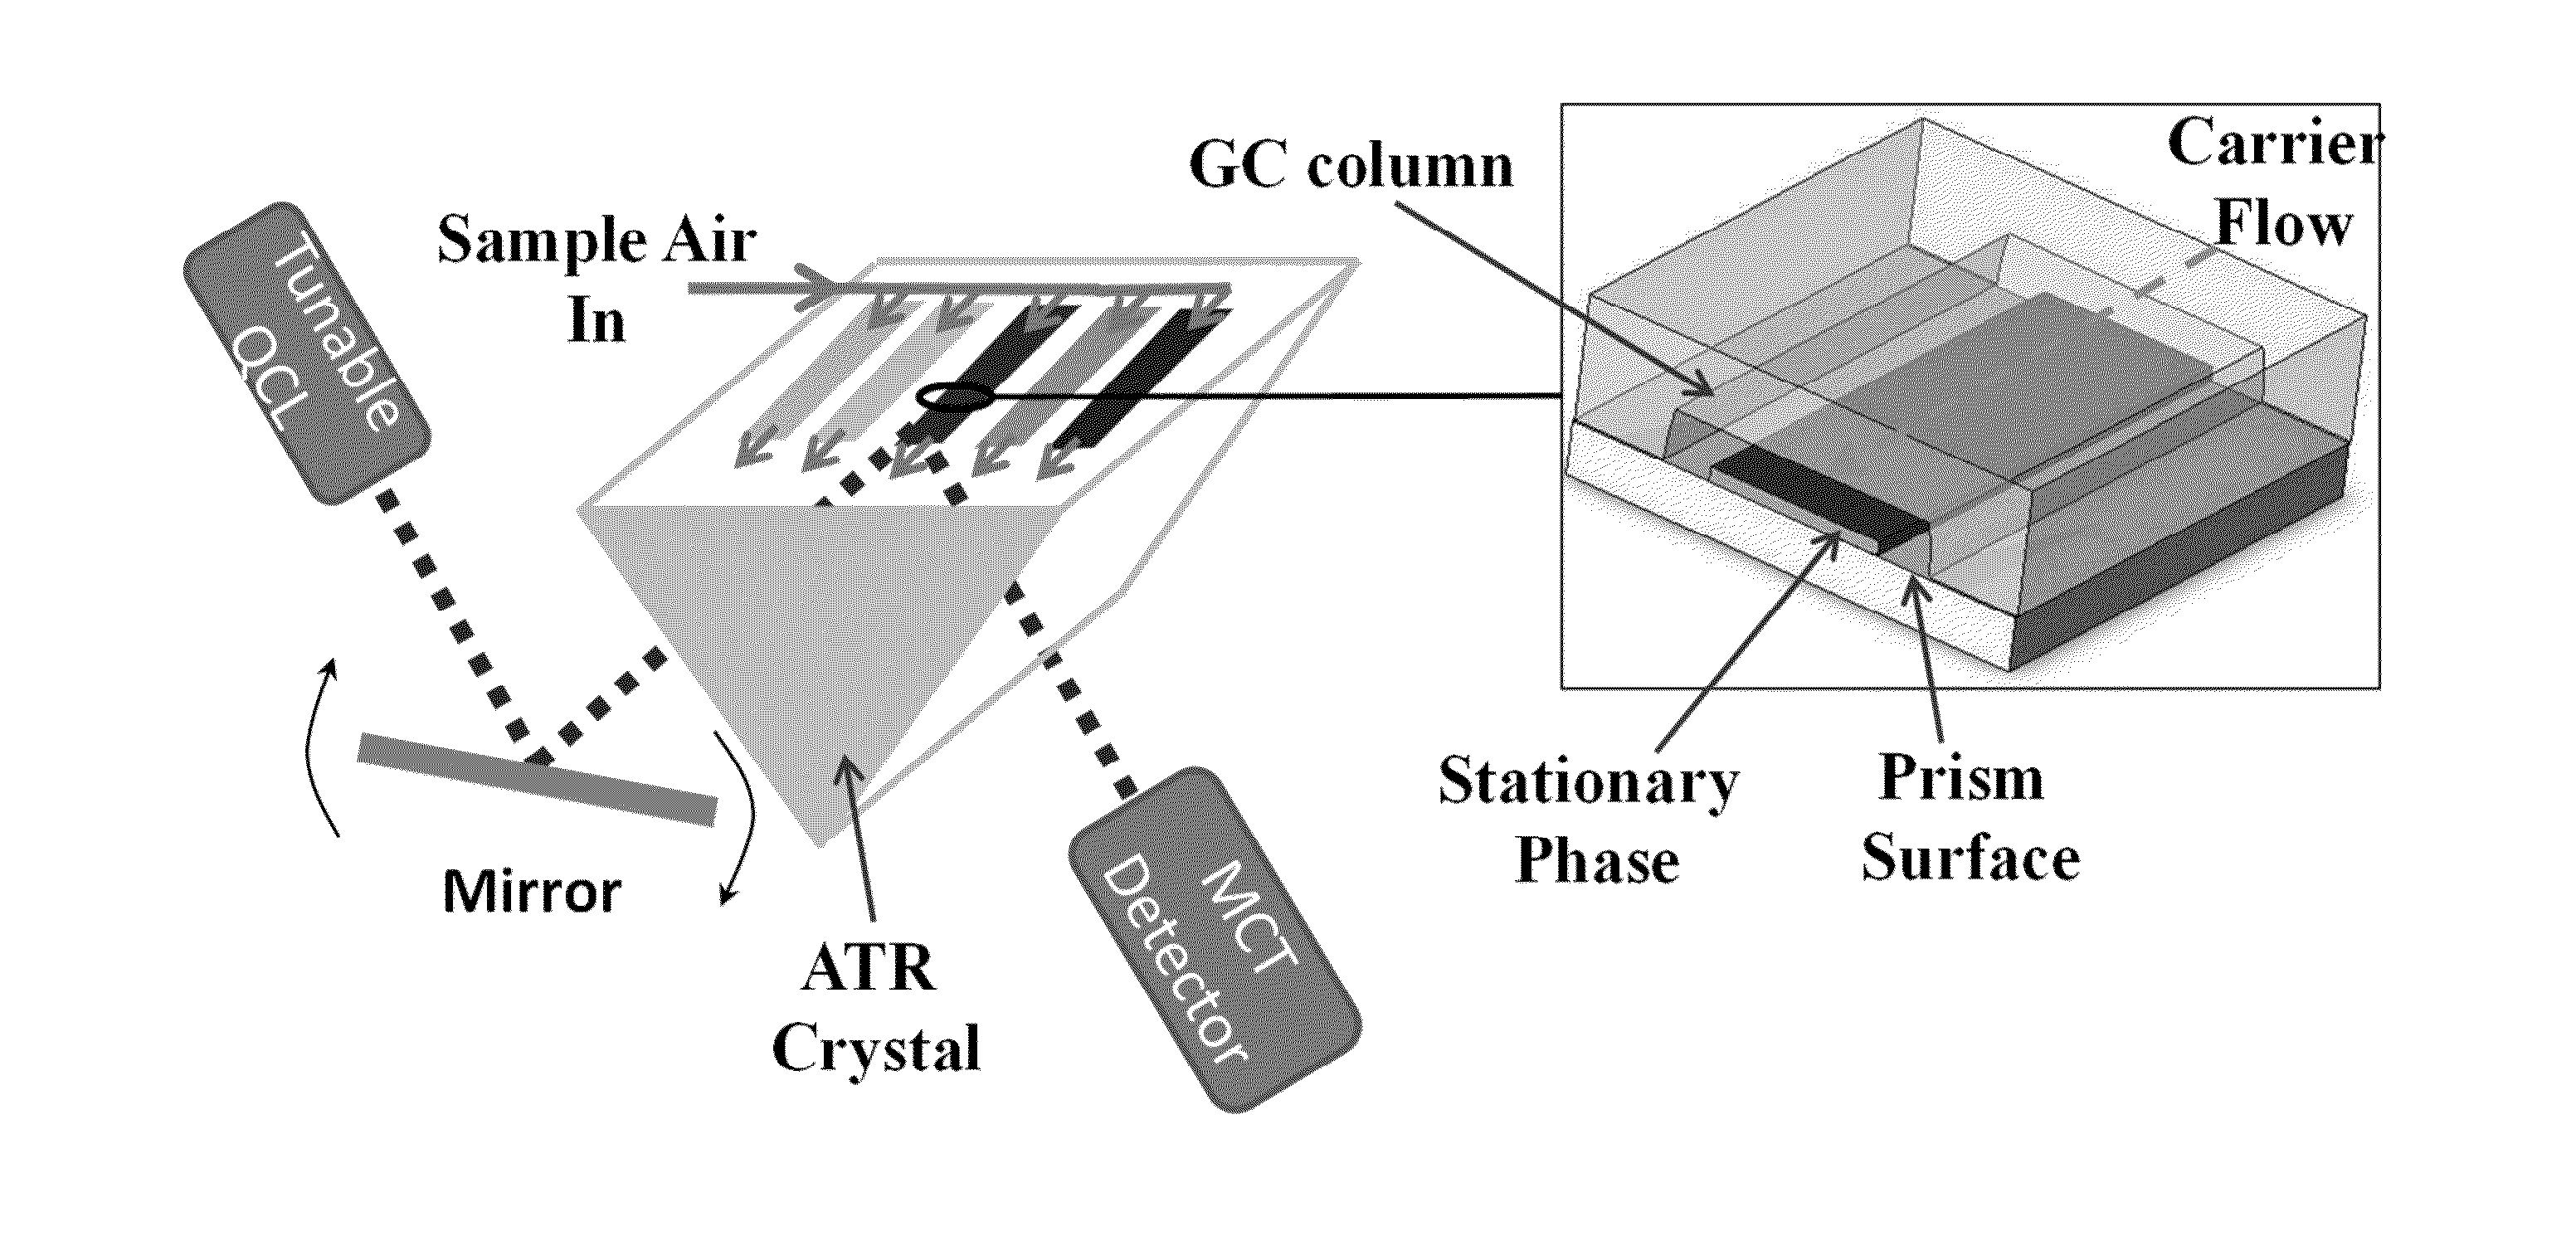 Gas chromatographic "in column" spectroscopic analysis